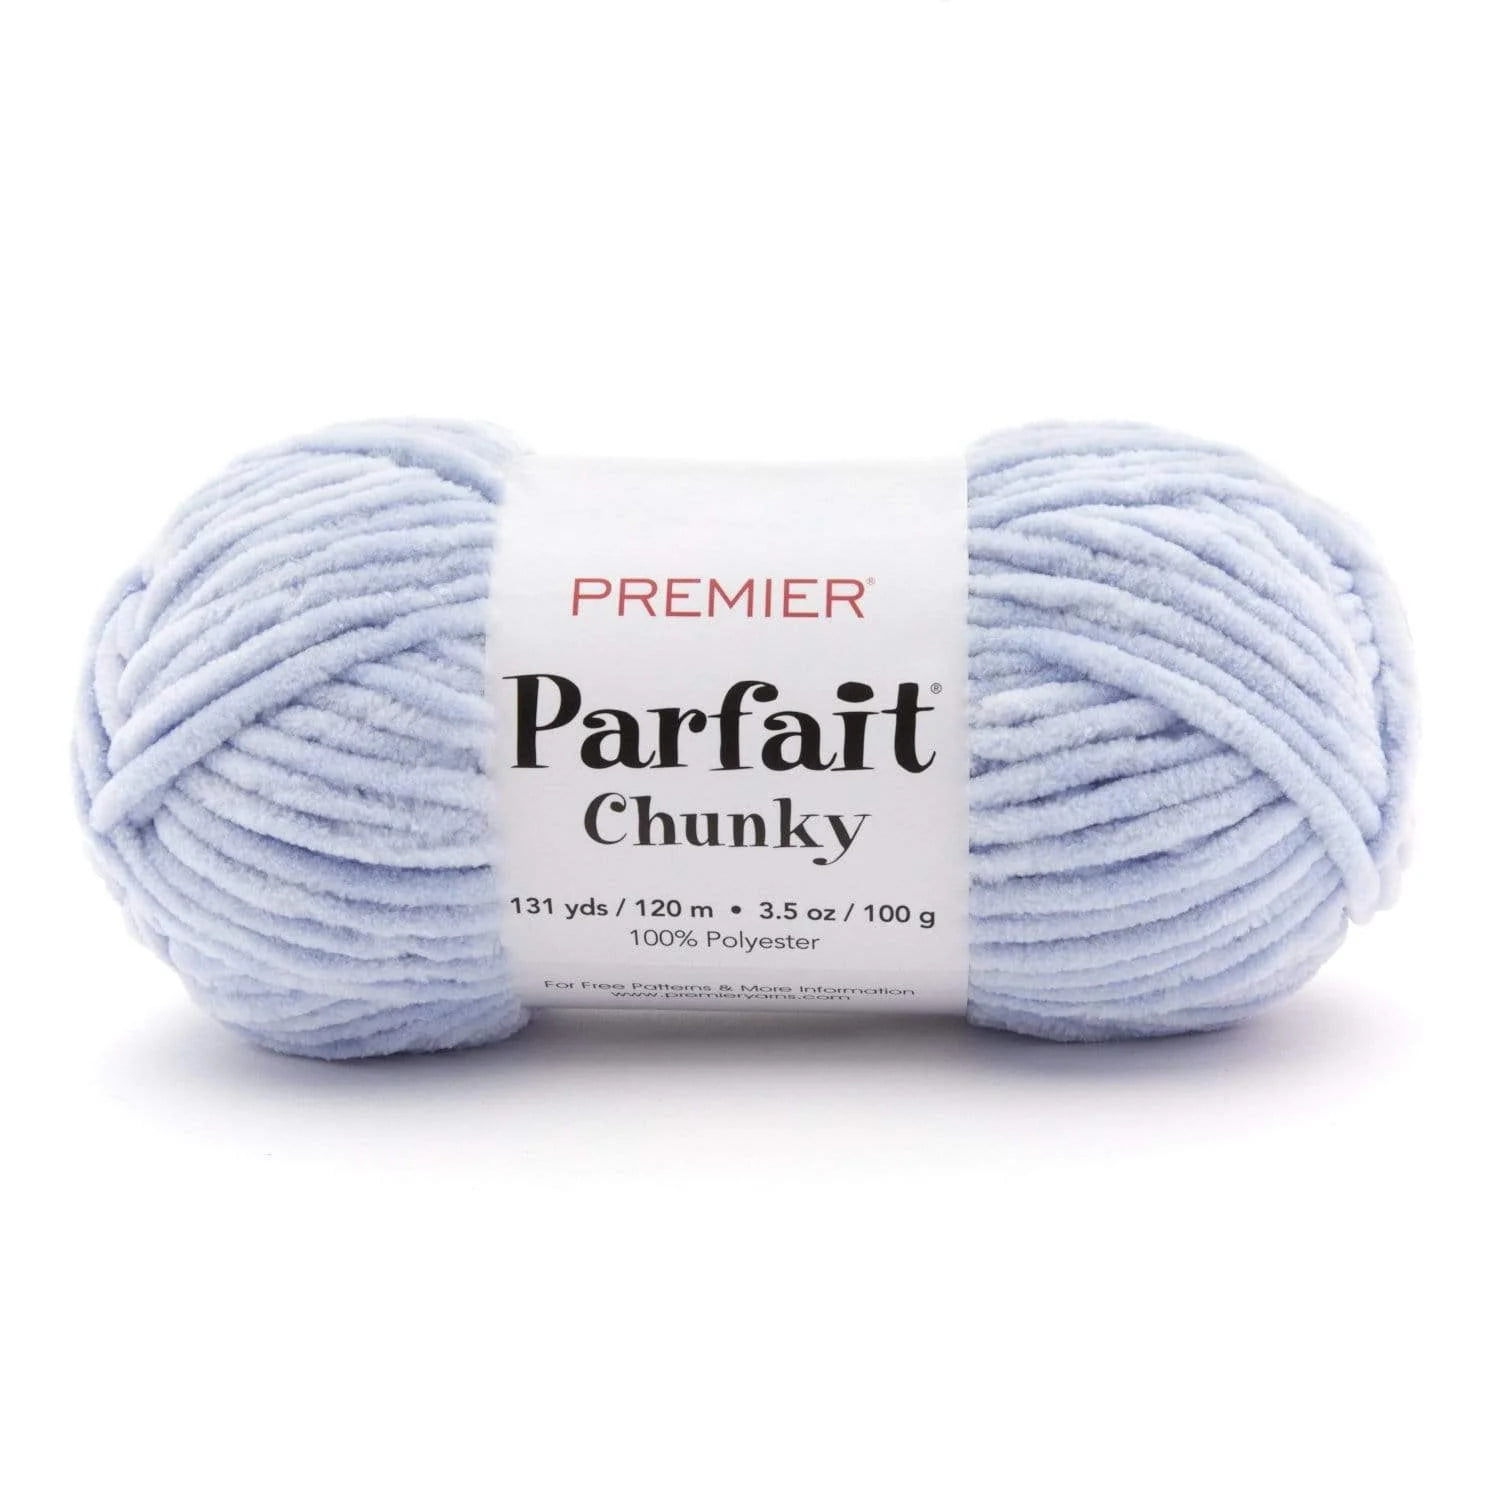 Premier Parfait Chunky Yarn-Seaside - 3 Pack